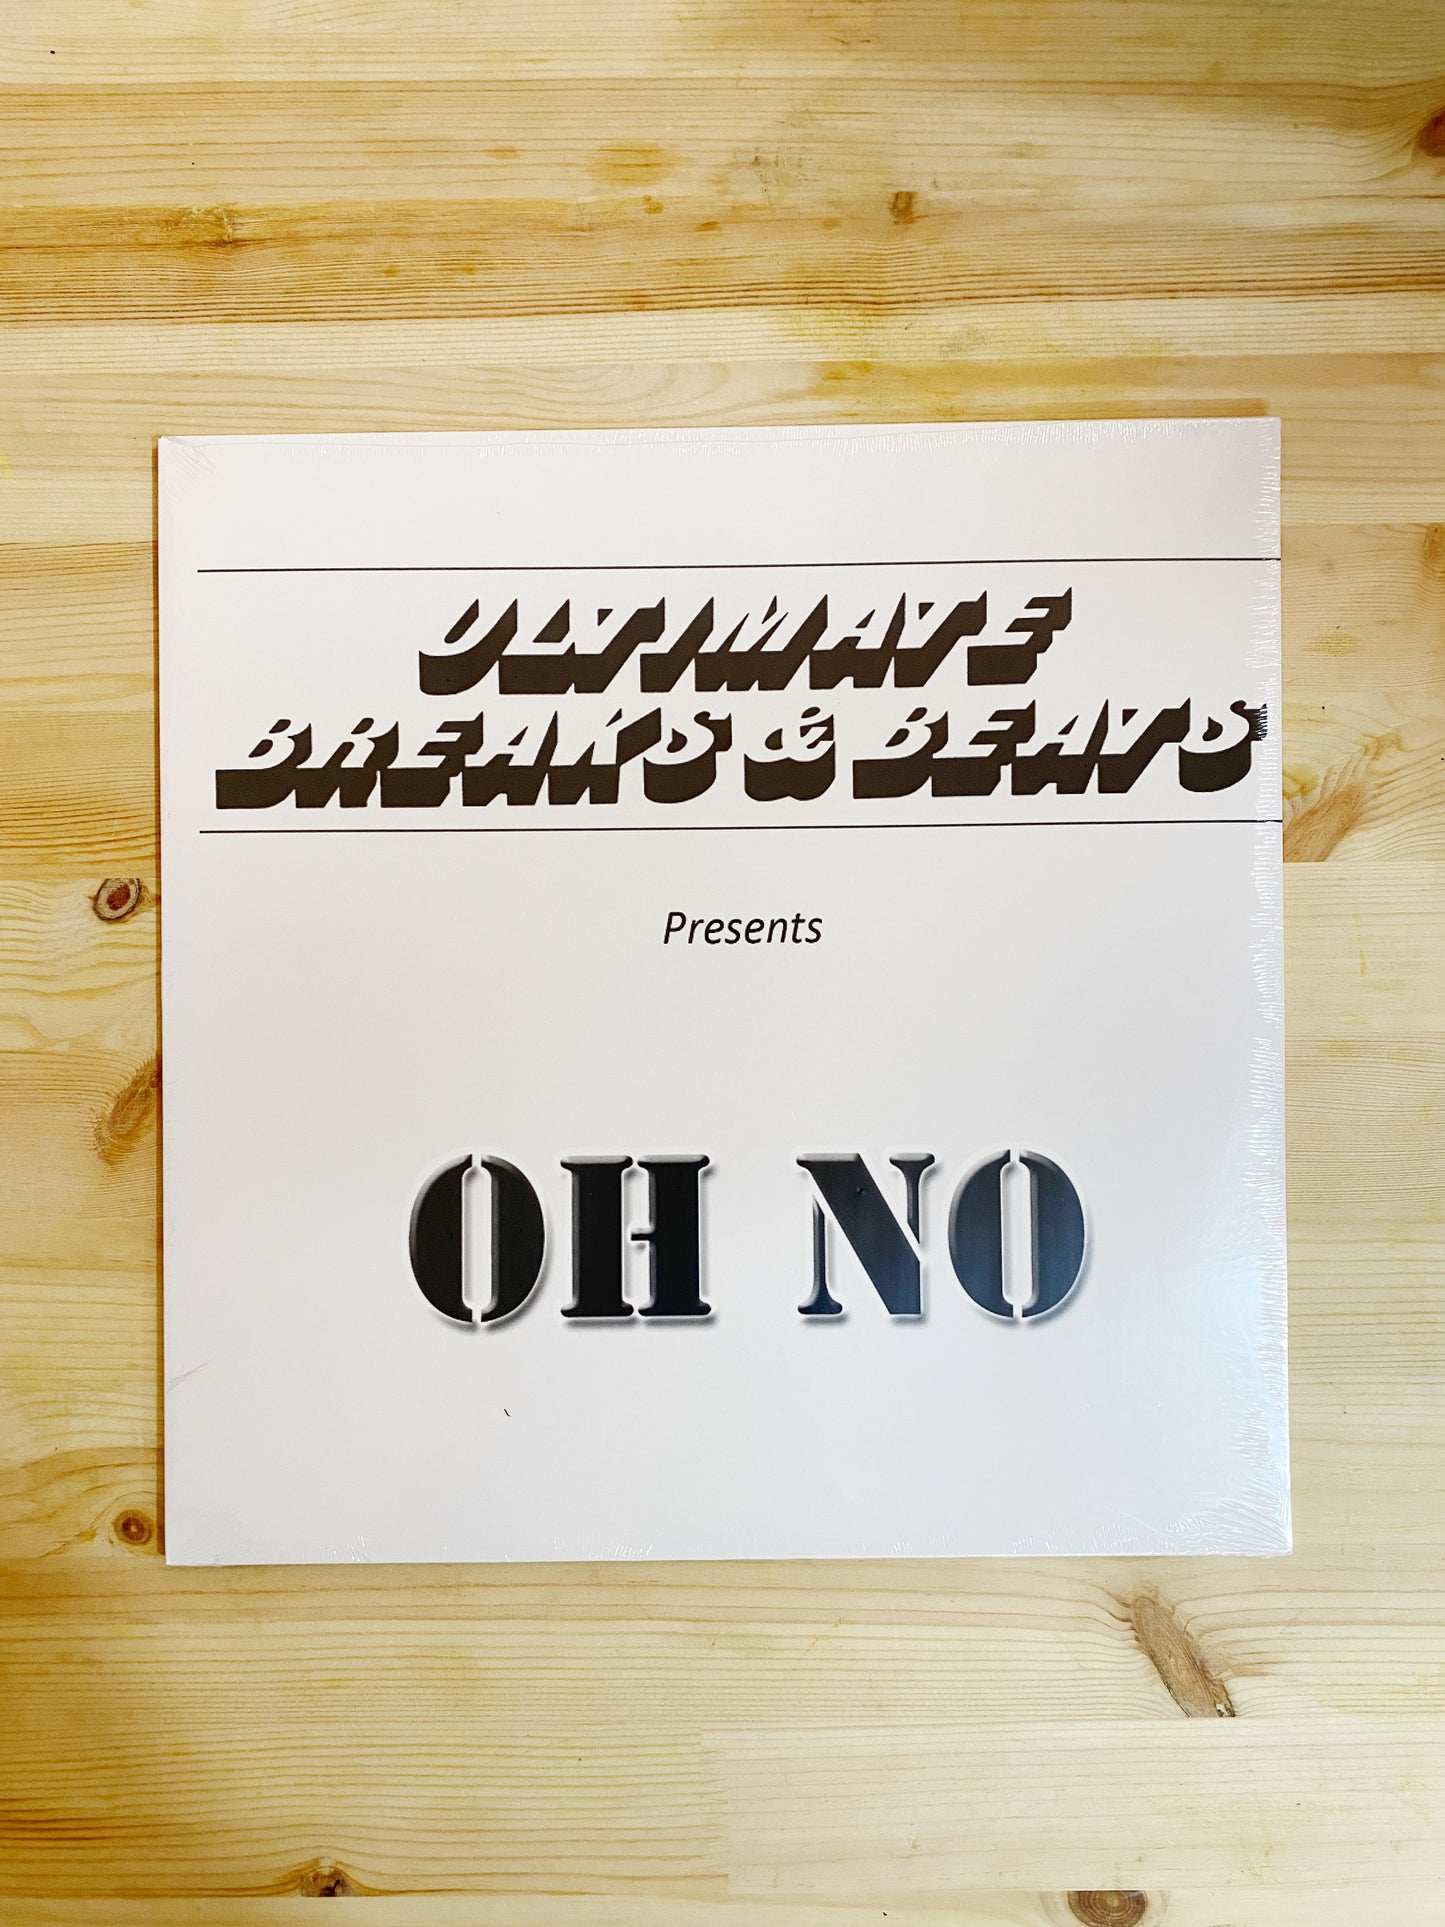 Oh No - Ultimate Breaks & Beats